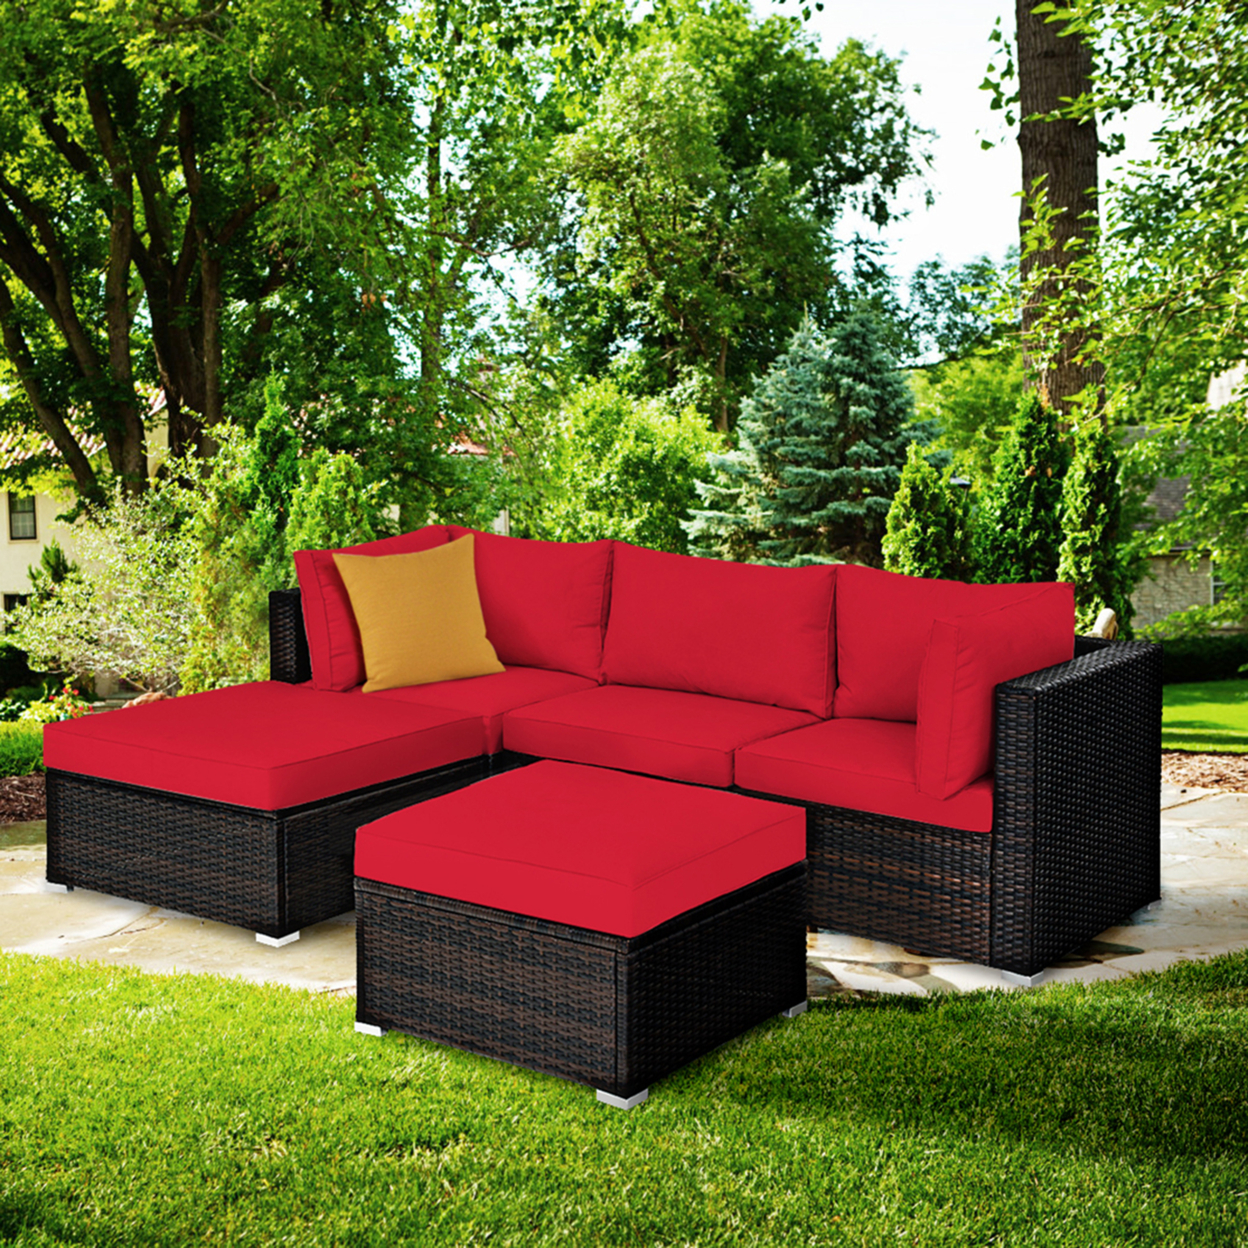 5PCS Rattan Patio Conversation Set Outdoor Furniture Set W/ Ottoman Red Cushion